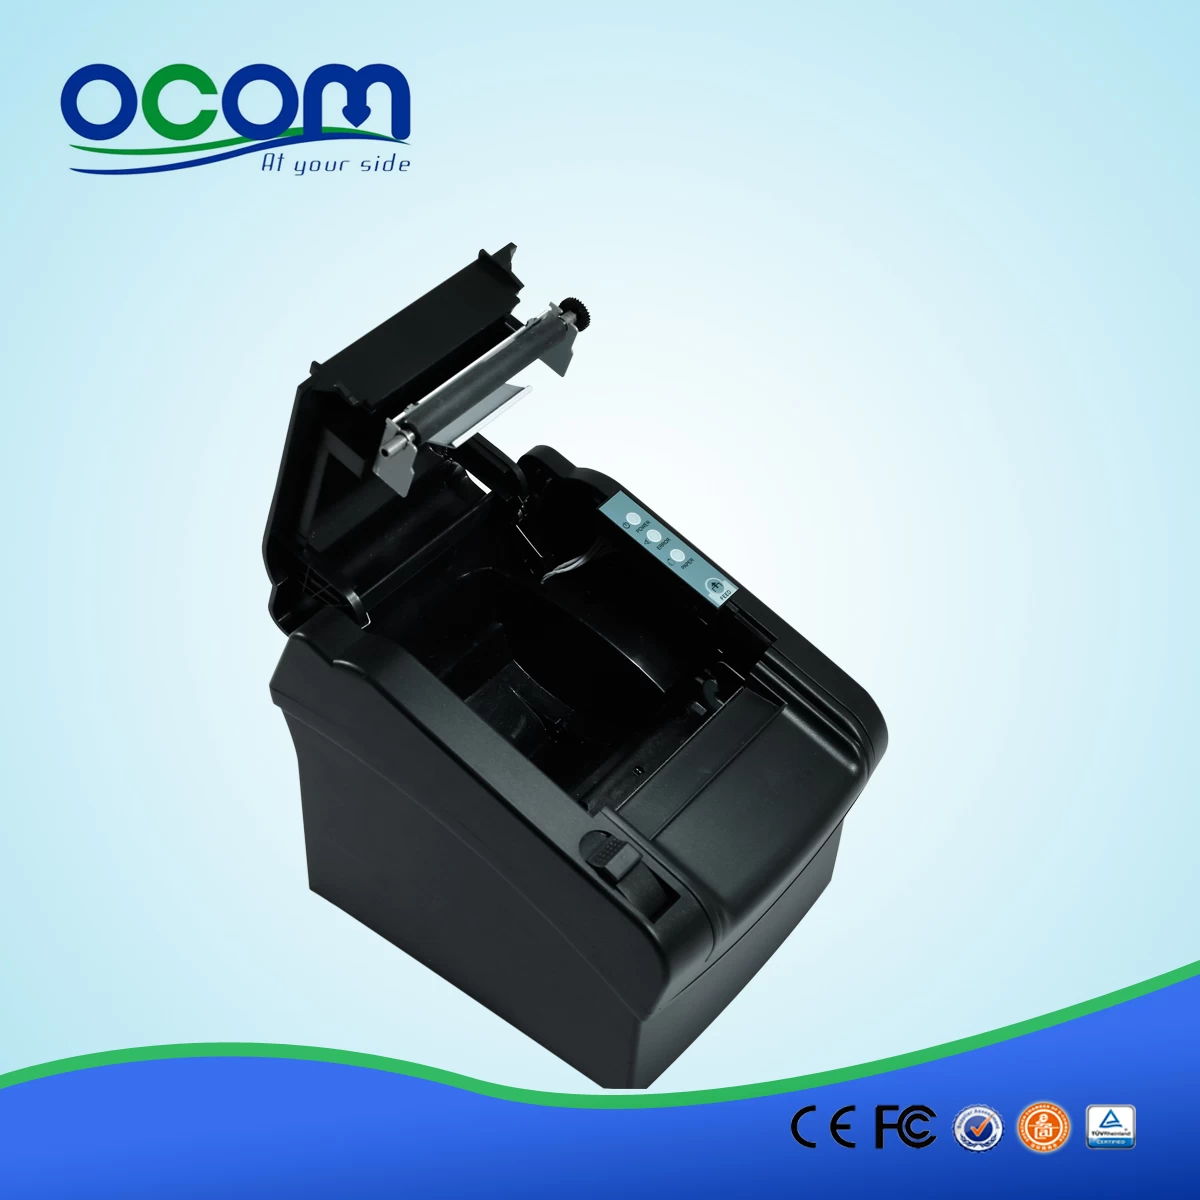 OCPP-802 Cheap USB Thermal Receipt Printer In China